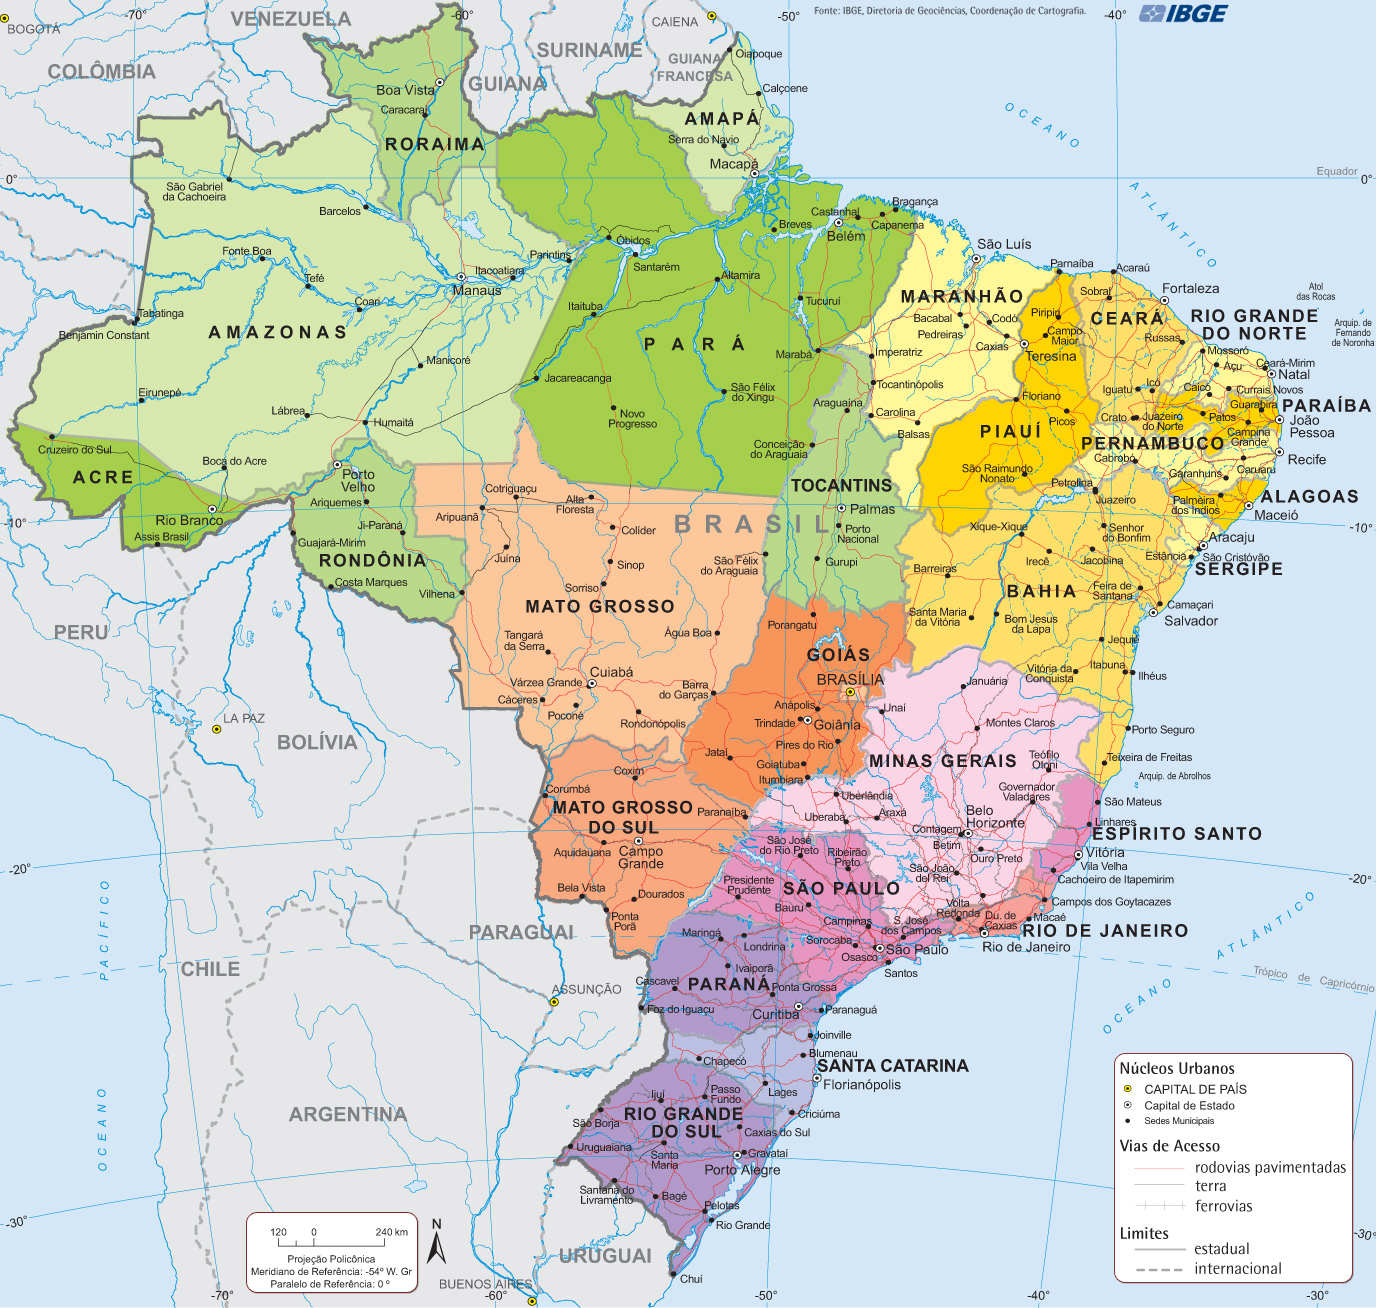 Mapas do Brasil varias imagens (mapa do brasil mapas do brasil )